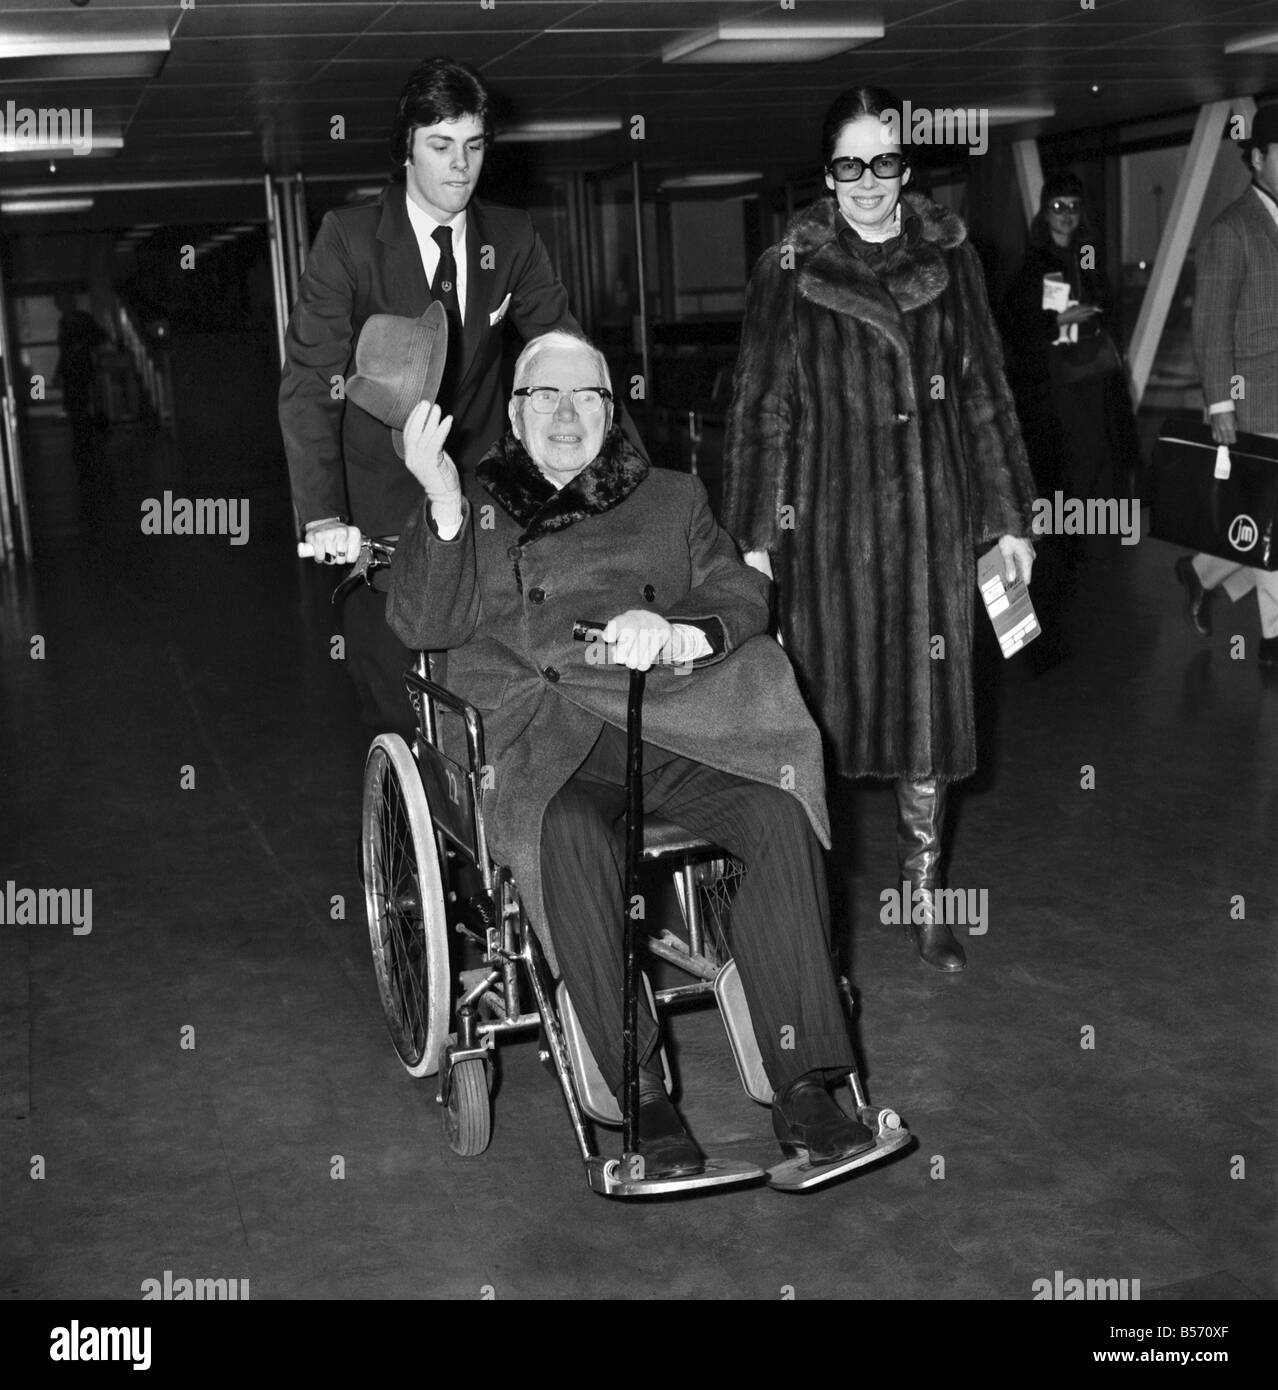 Film britannico Sir attore Charlie Chaplin arriva a Heathrow airport. &#13;&#10;Gennaio 1975 &#13;&#10;75-00350-001 Foto Stock